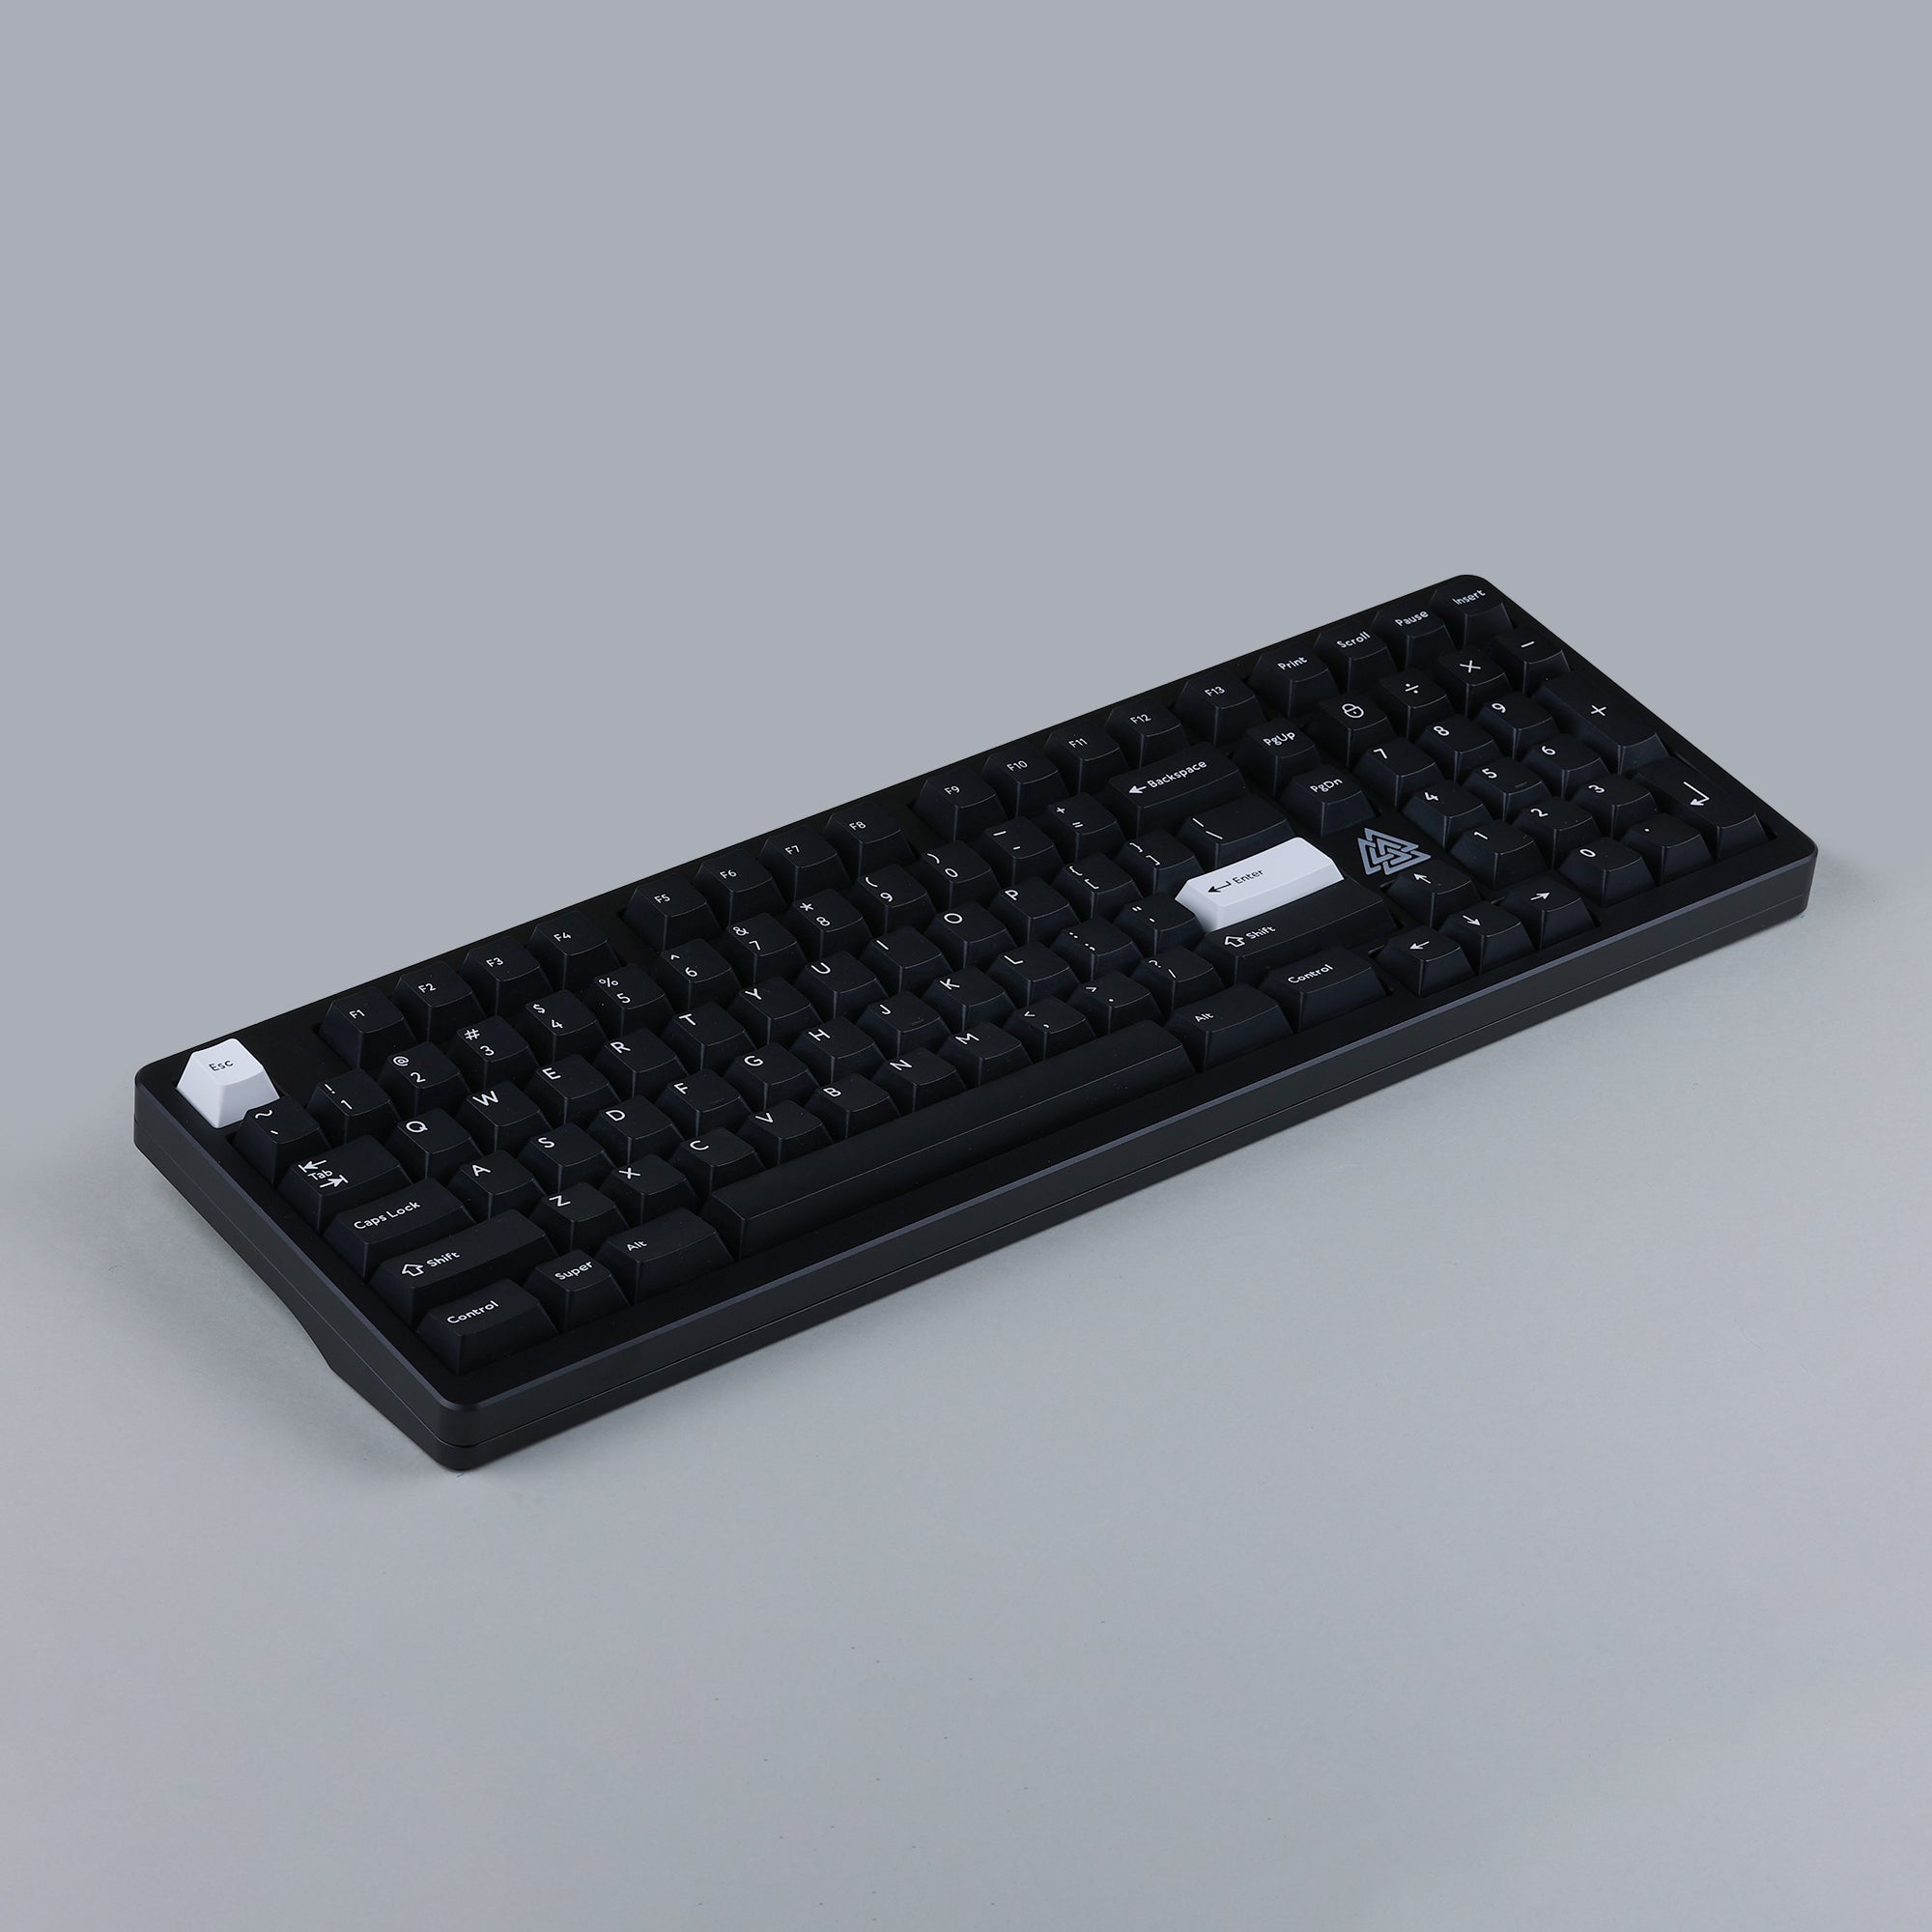 KBDfans Custom Keyboard Ready to use Odin v2 Hot-swap Keyboard With PBTfans WOB Keycaps